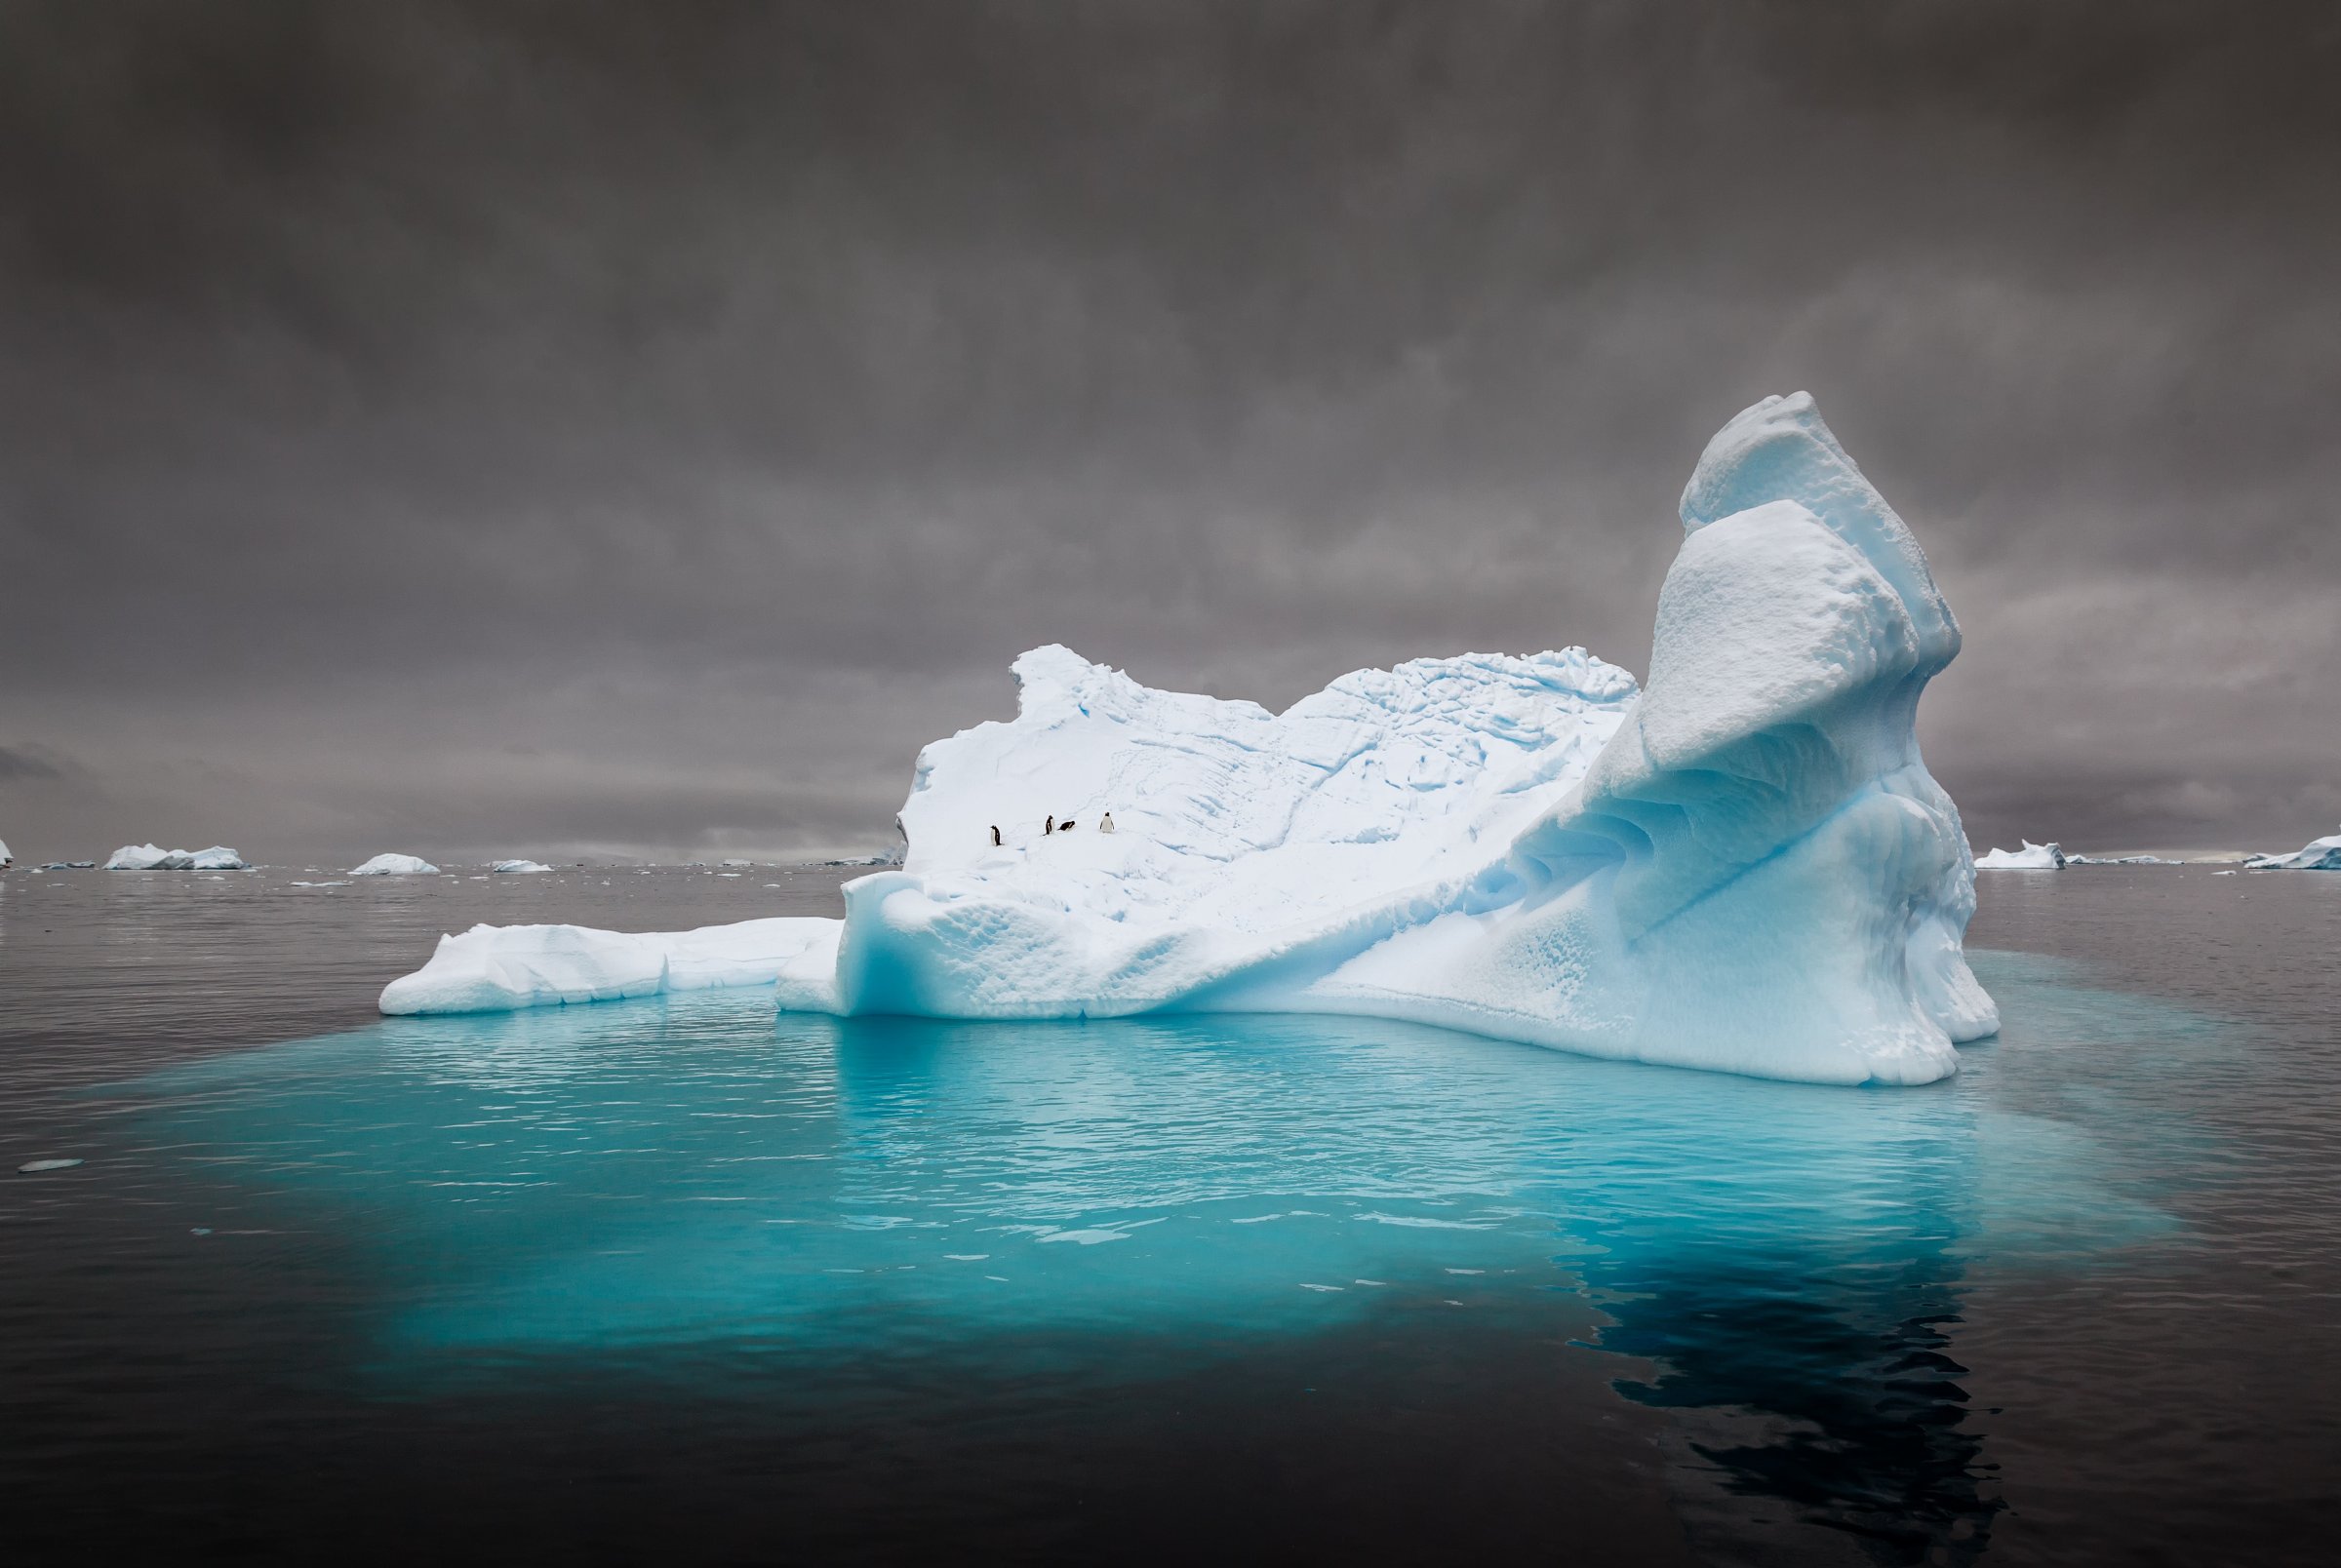 Grandma swept out to sea on iceberg becomes hero.